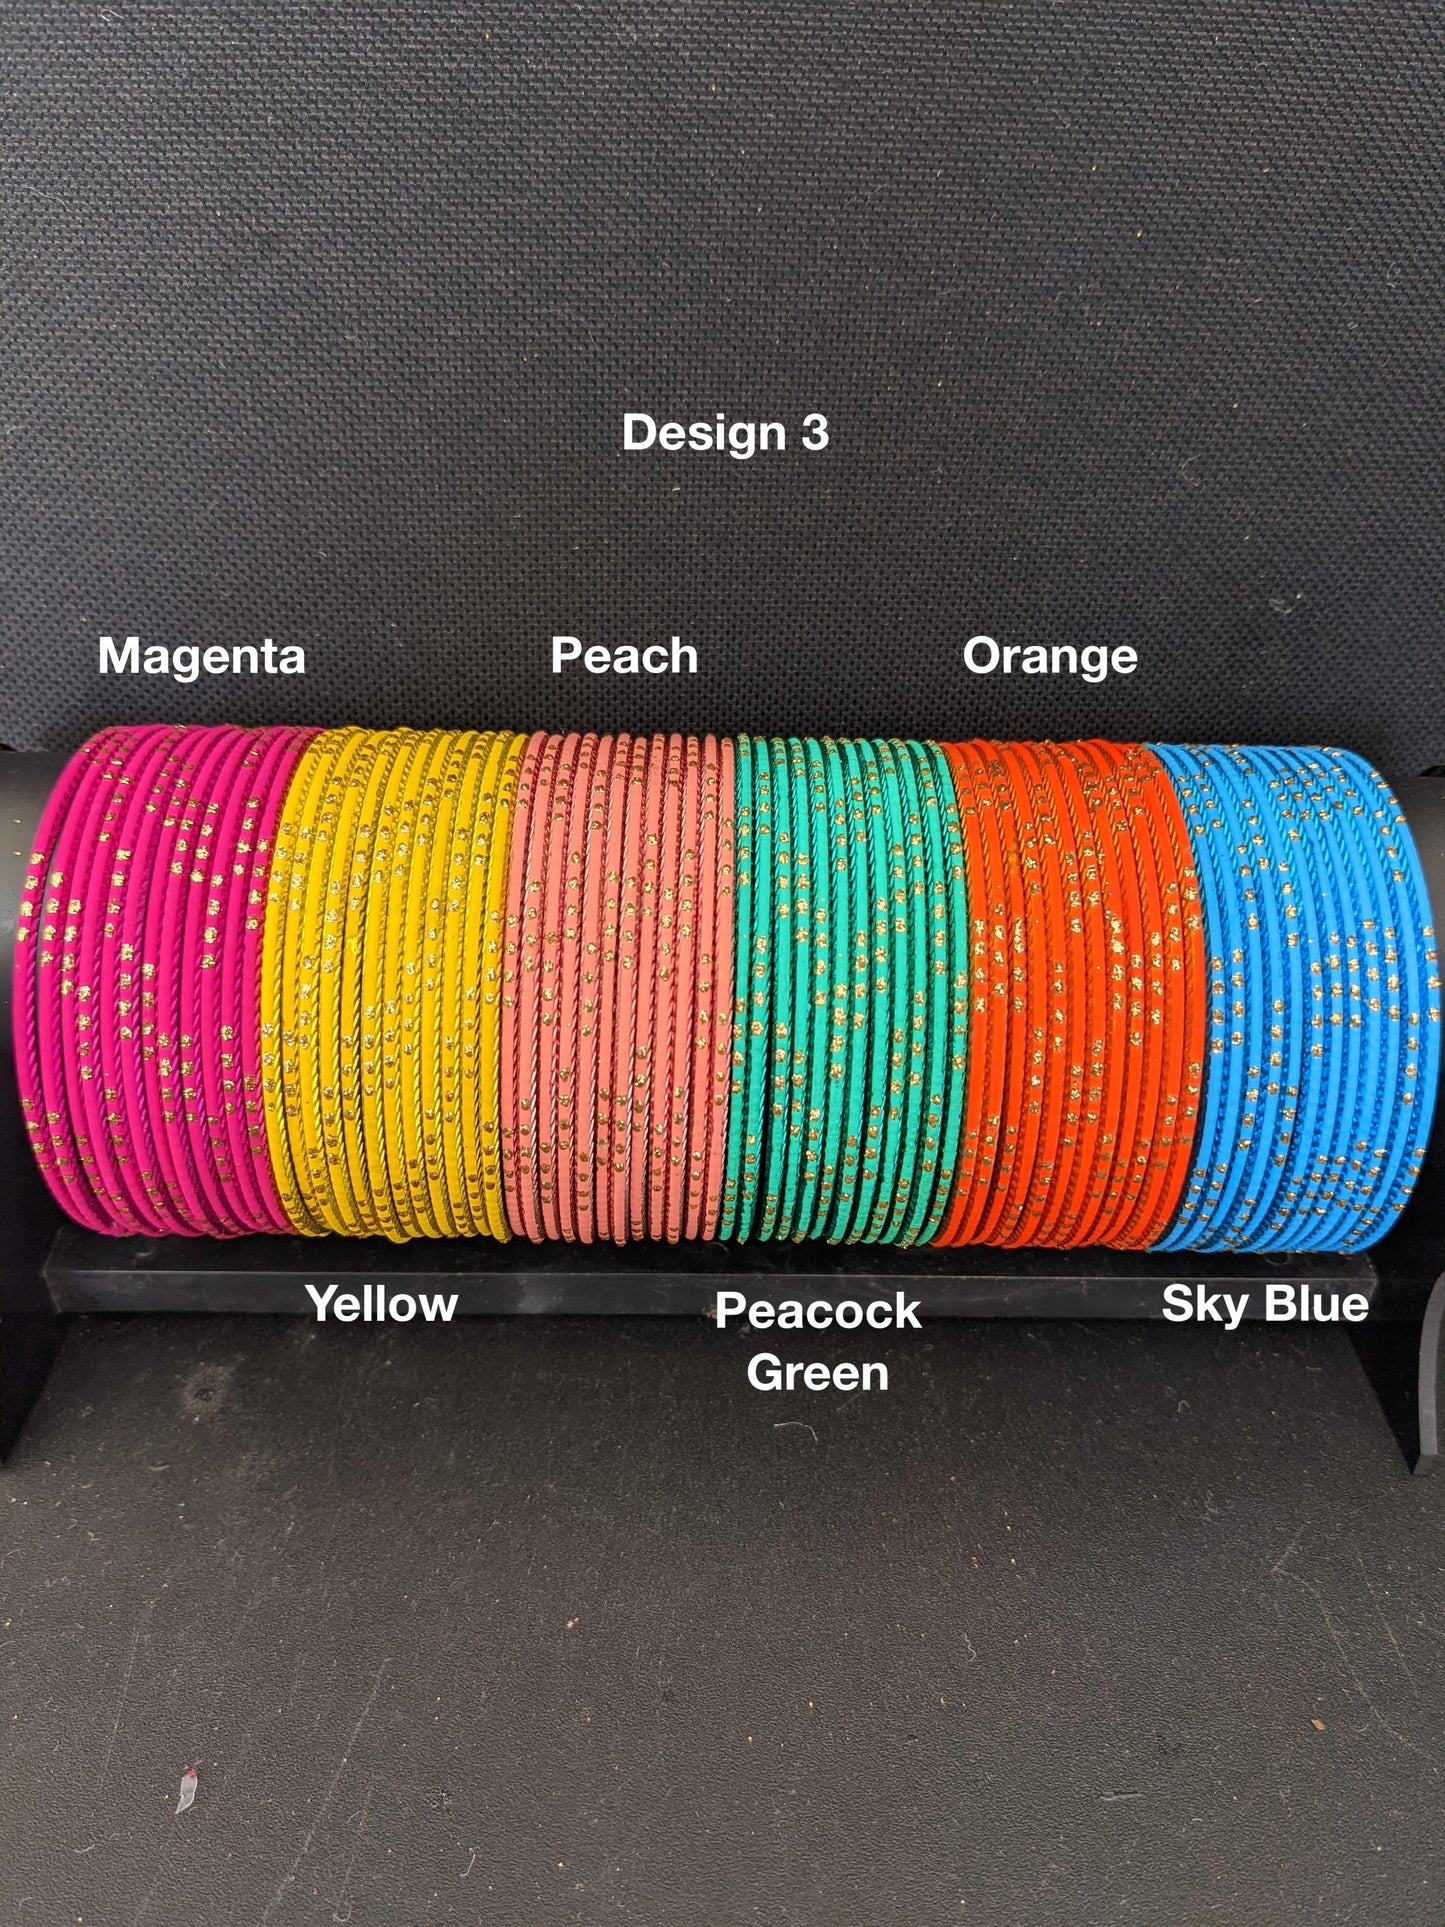 Design 3 / Big size bangles  / Colorful Thin Metal Bangles - 1 dozen - 2x10 2x12